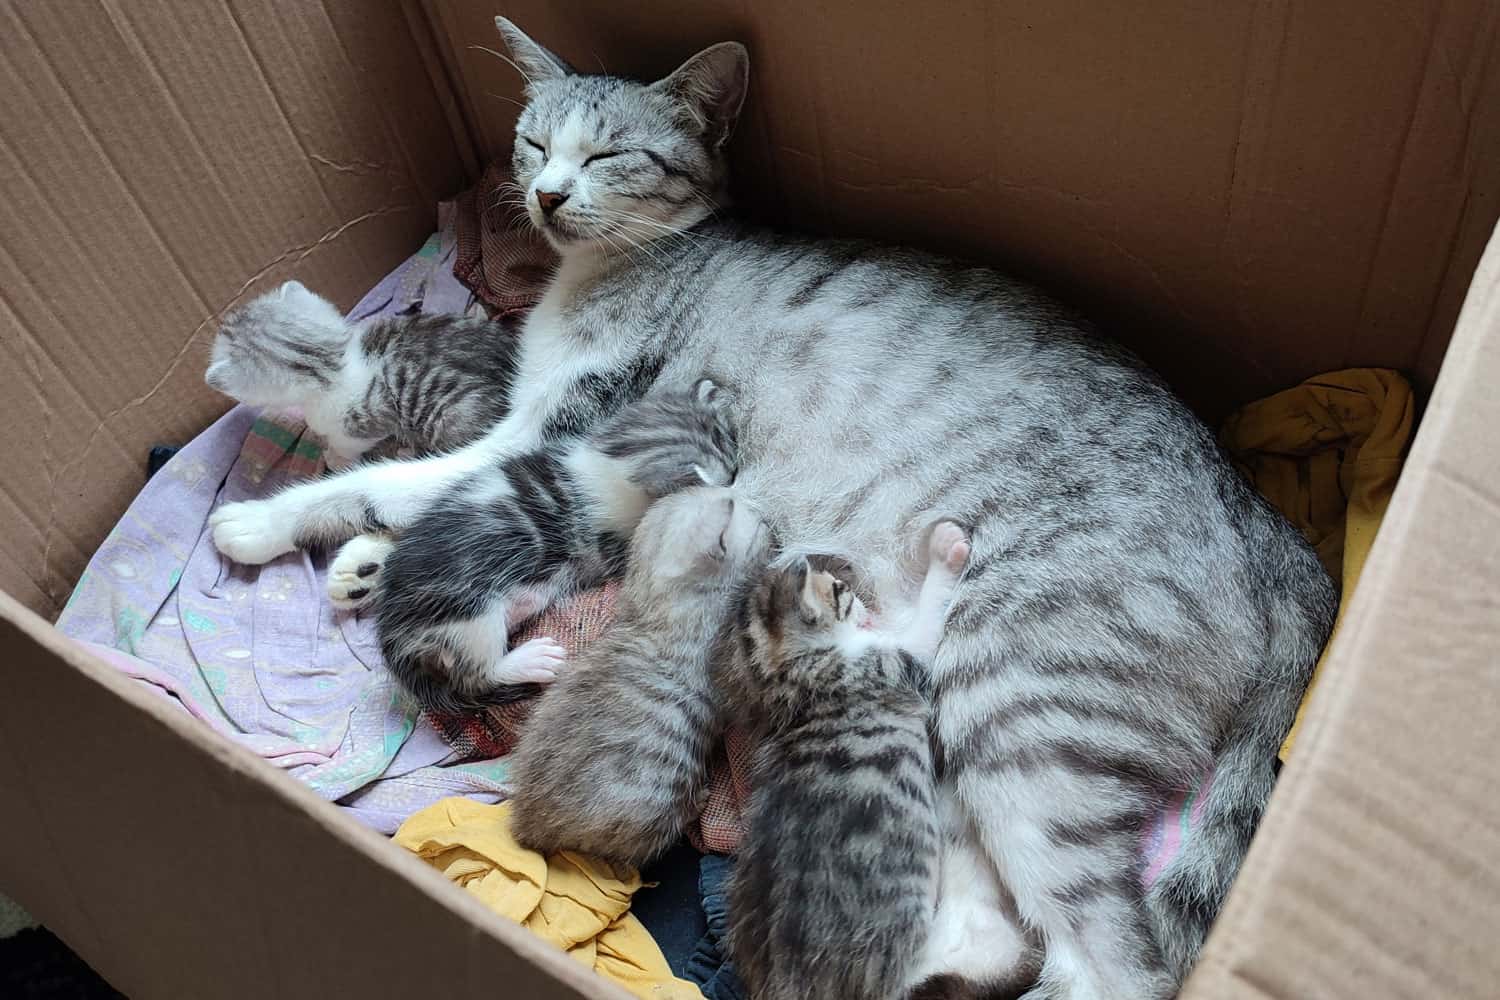 A mother cat is nursing her newborn kittens in a cardboard box
